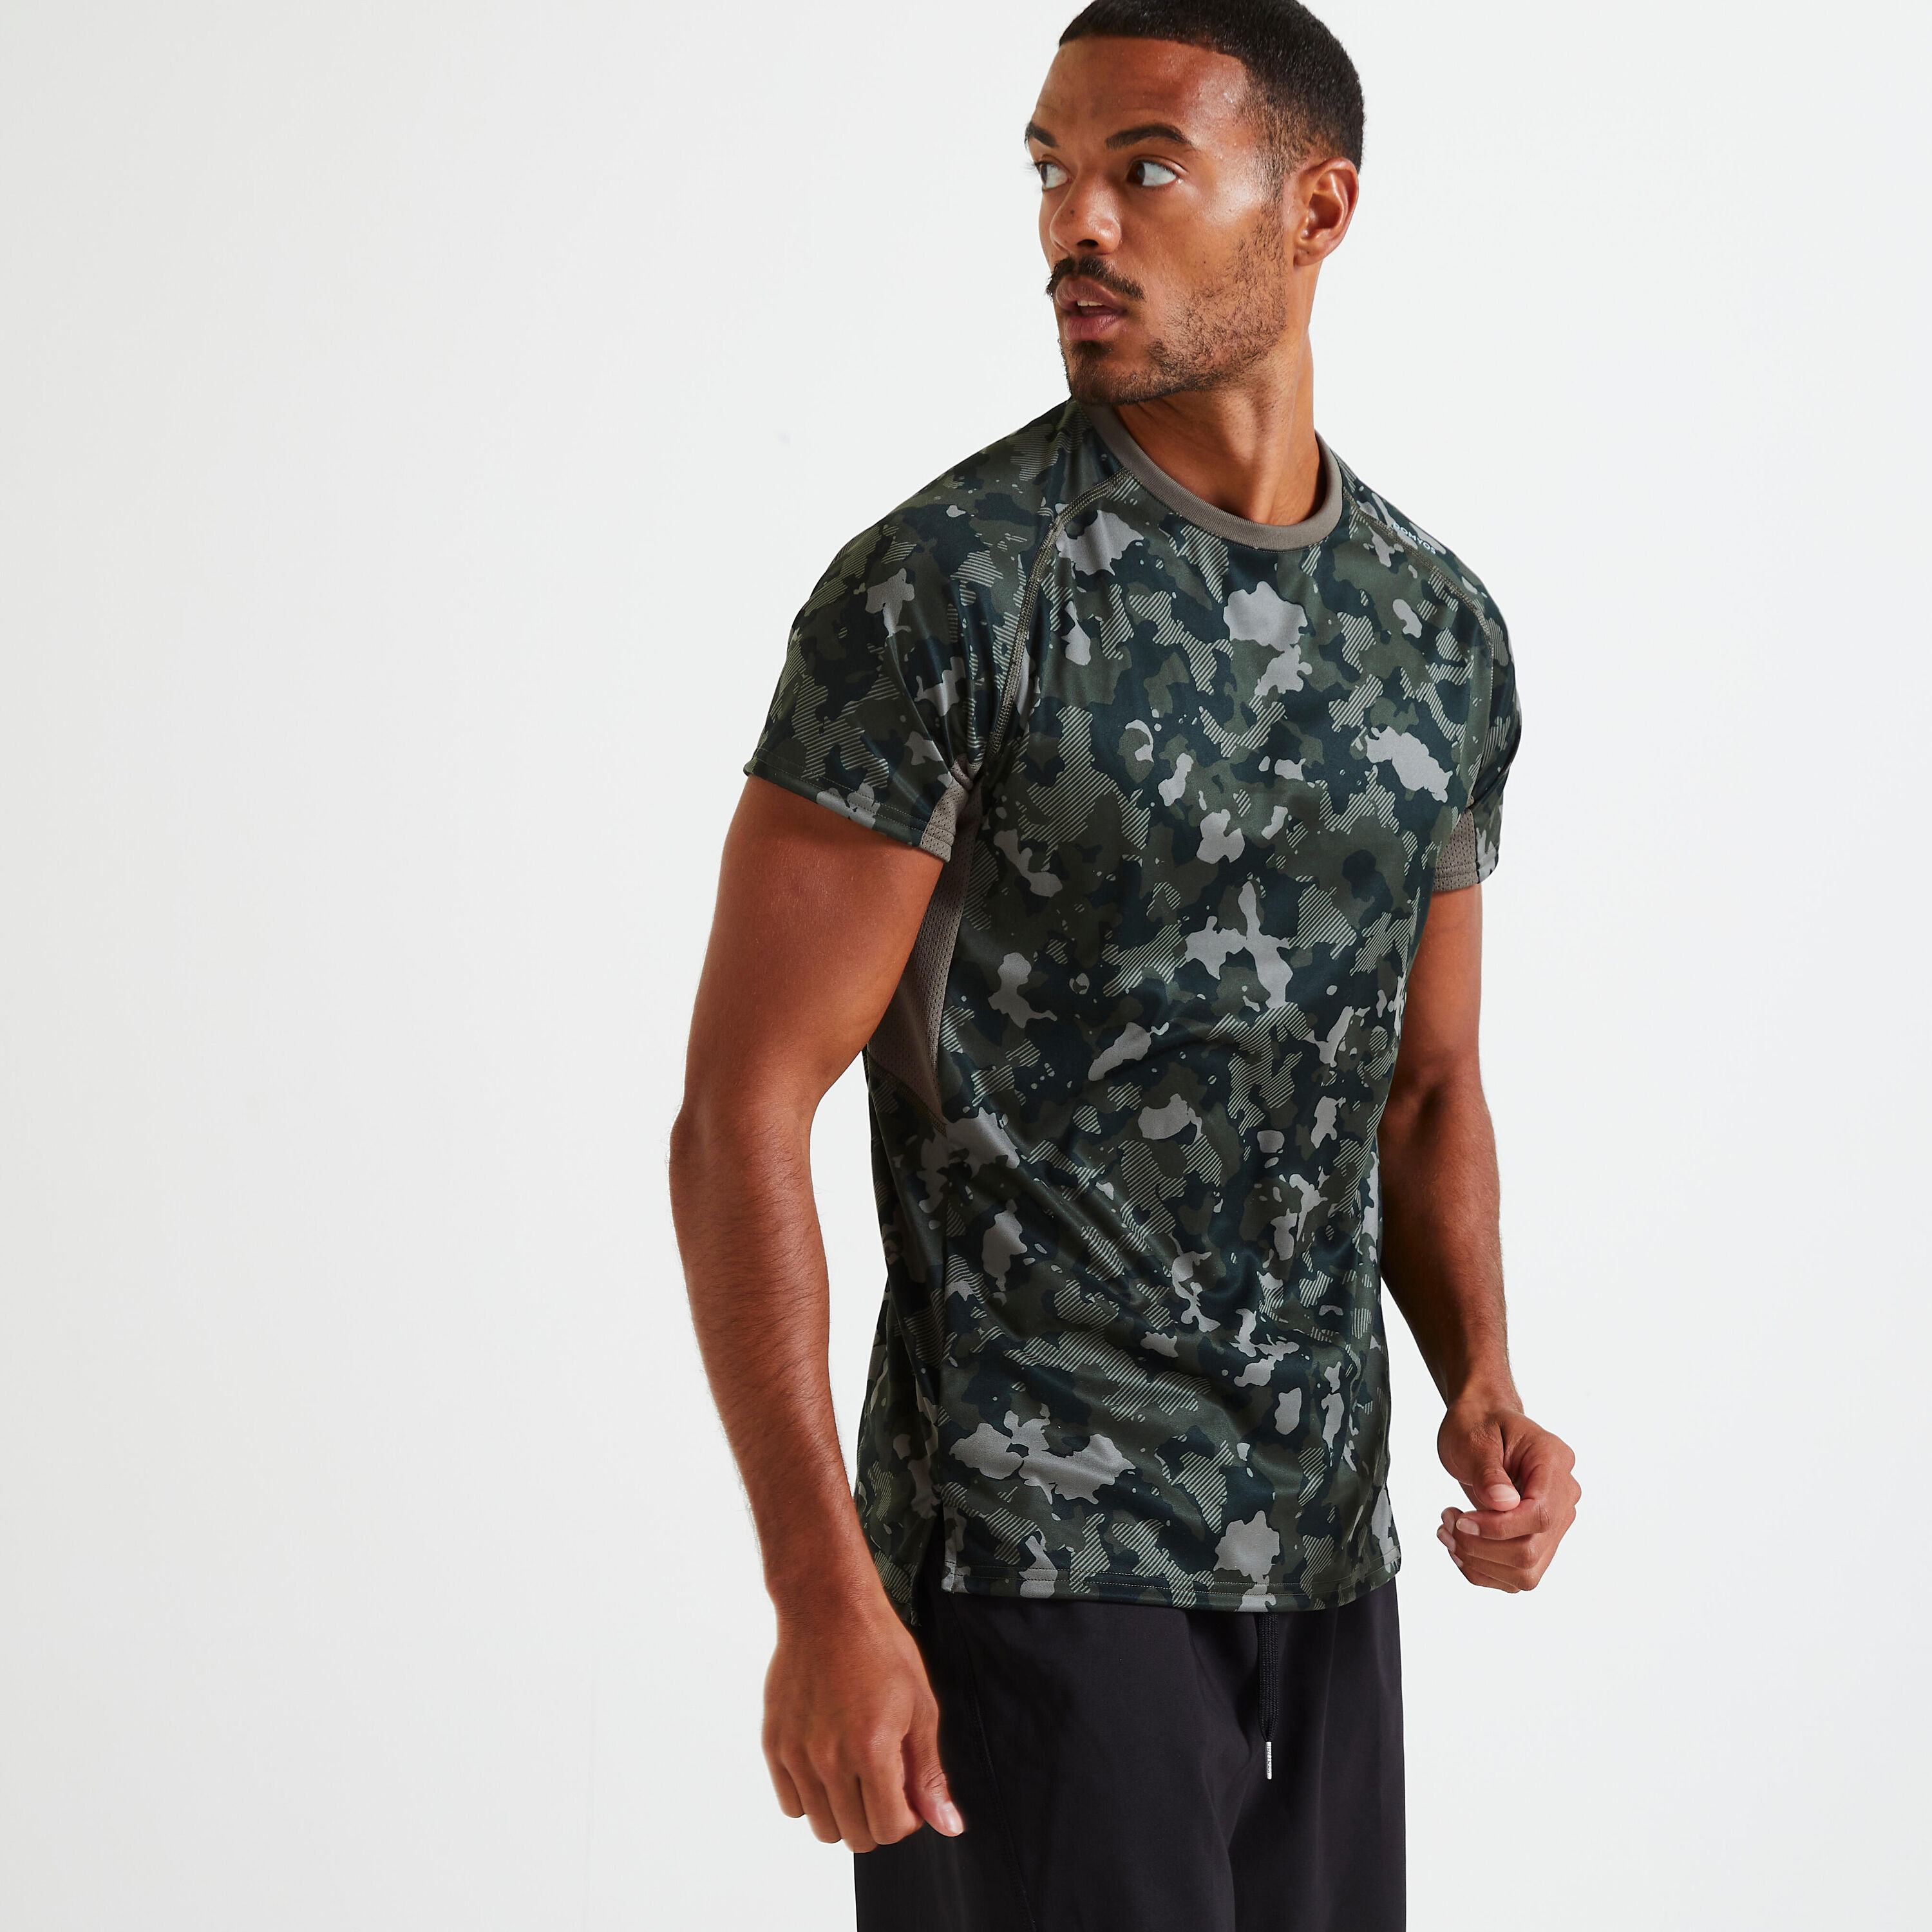 DOMYOS Technical Fitness T-Shirt - Grey Print/Camouflage/Khaki